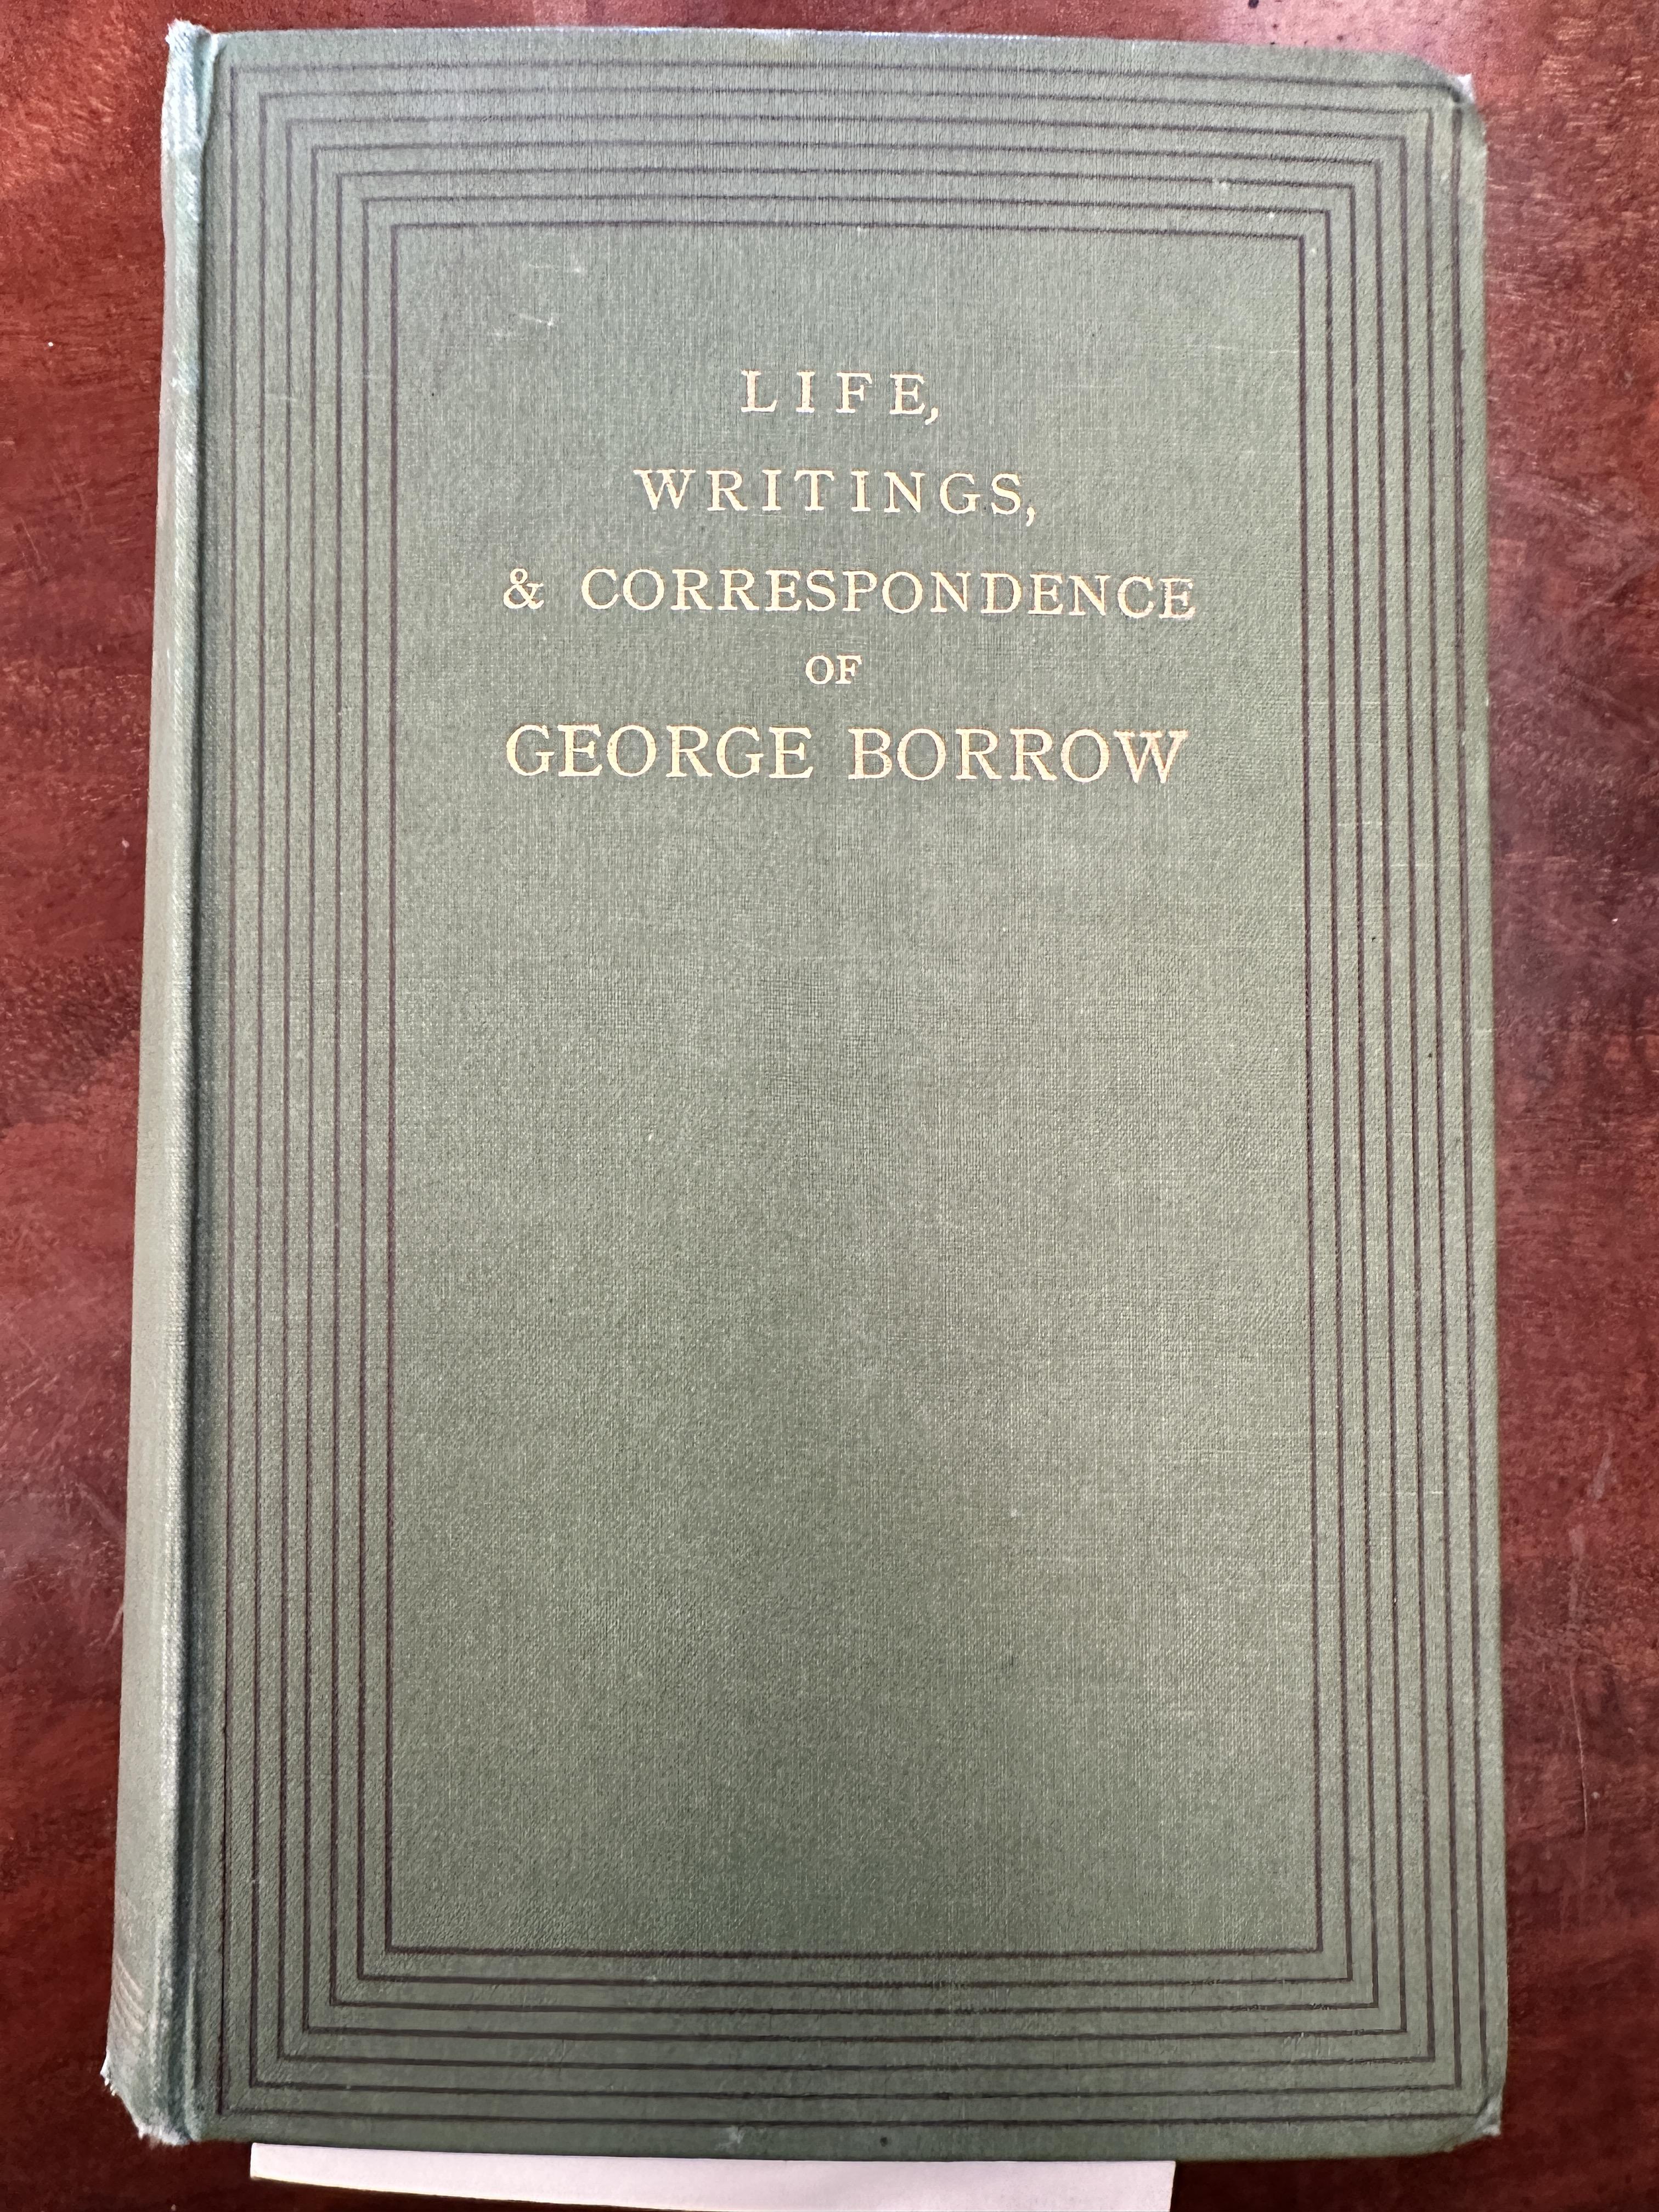 William I Knapp: 'Life, Writings, and Correspondence of George Borrow', John Murray, 1899, 1st ed.